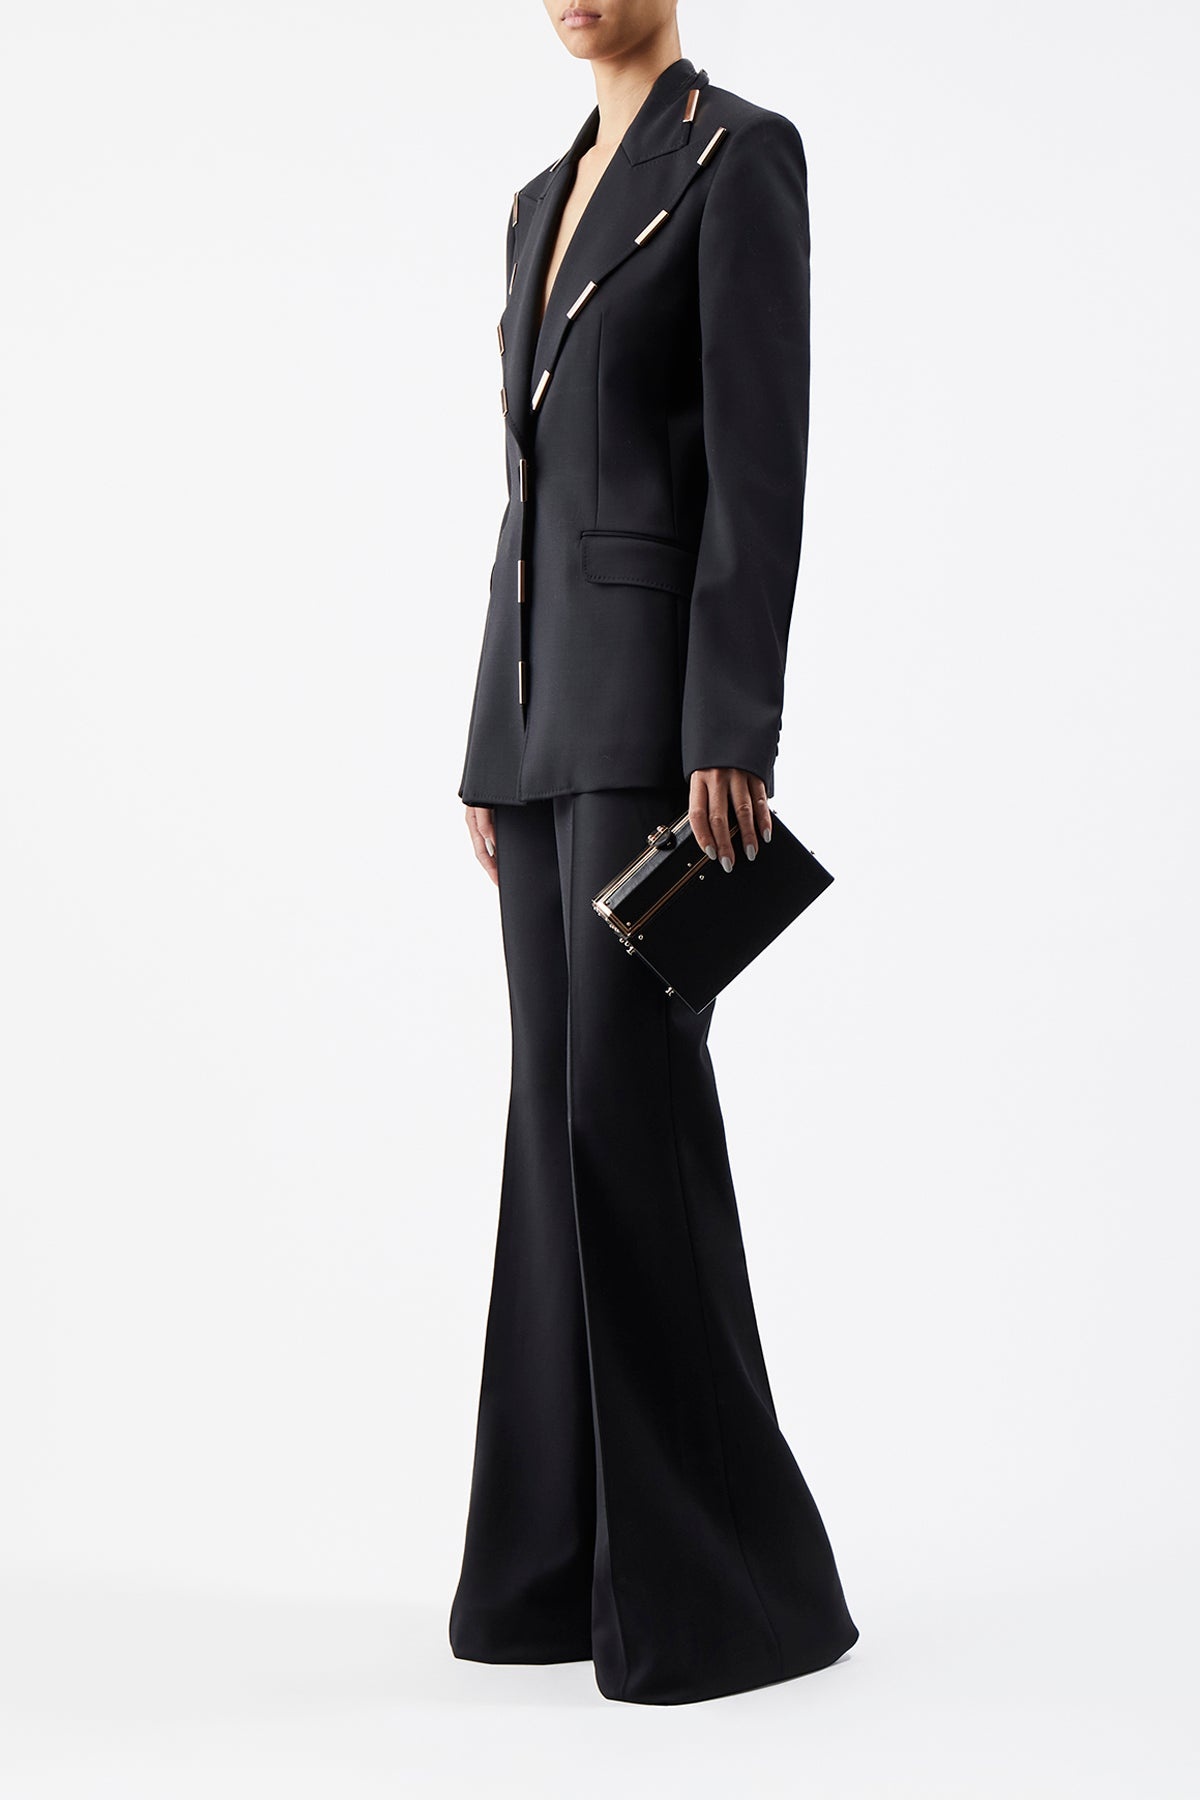 Leiva Blazer in Black Sportswear Wool with Gold Bars - 4